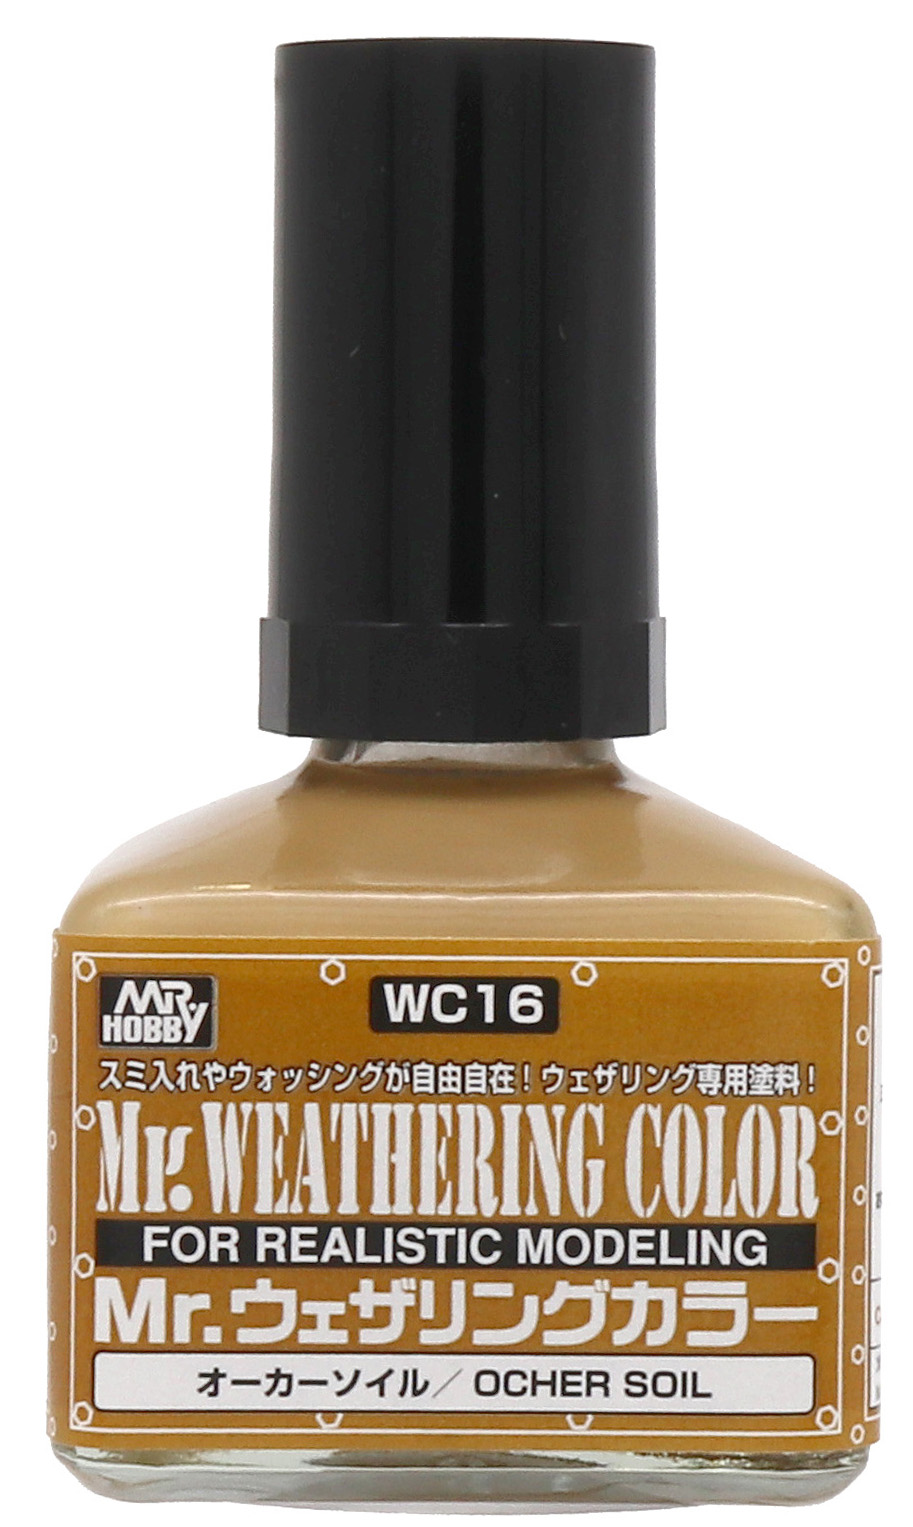 Mr.ウェザリングカラー | ウェザリング塗料 | 塗料・うすめ液 | GSI クレオス Mr.HOBBY